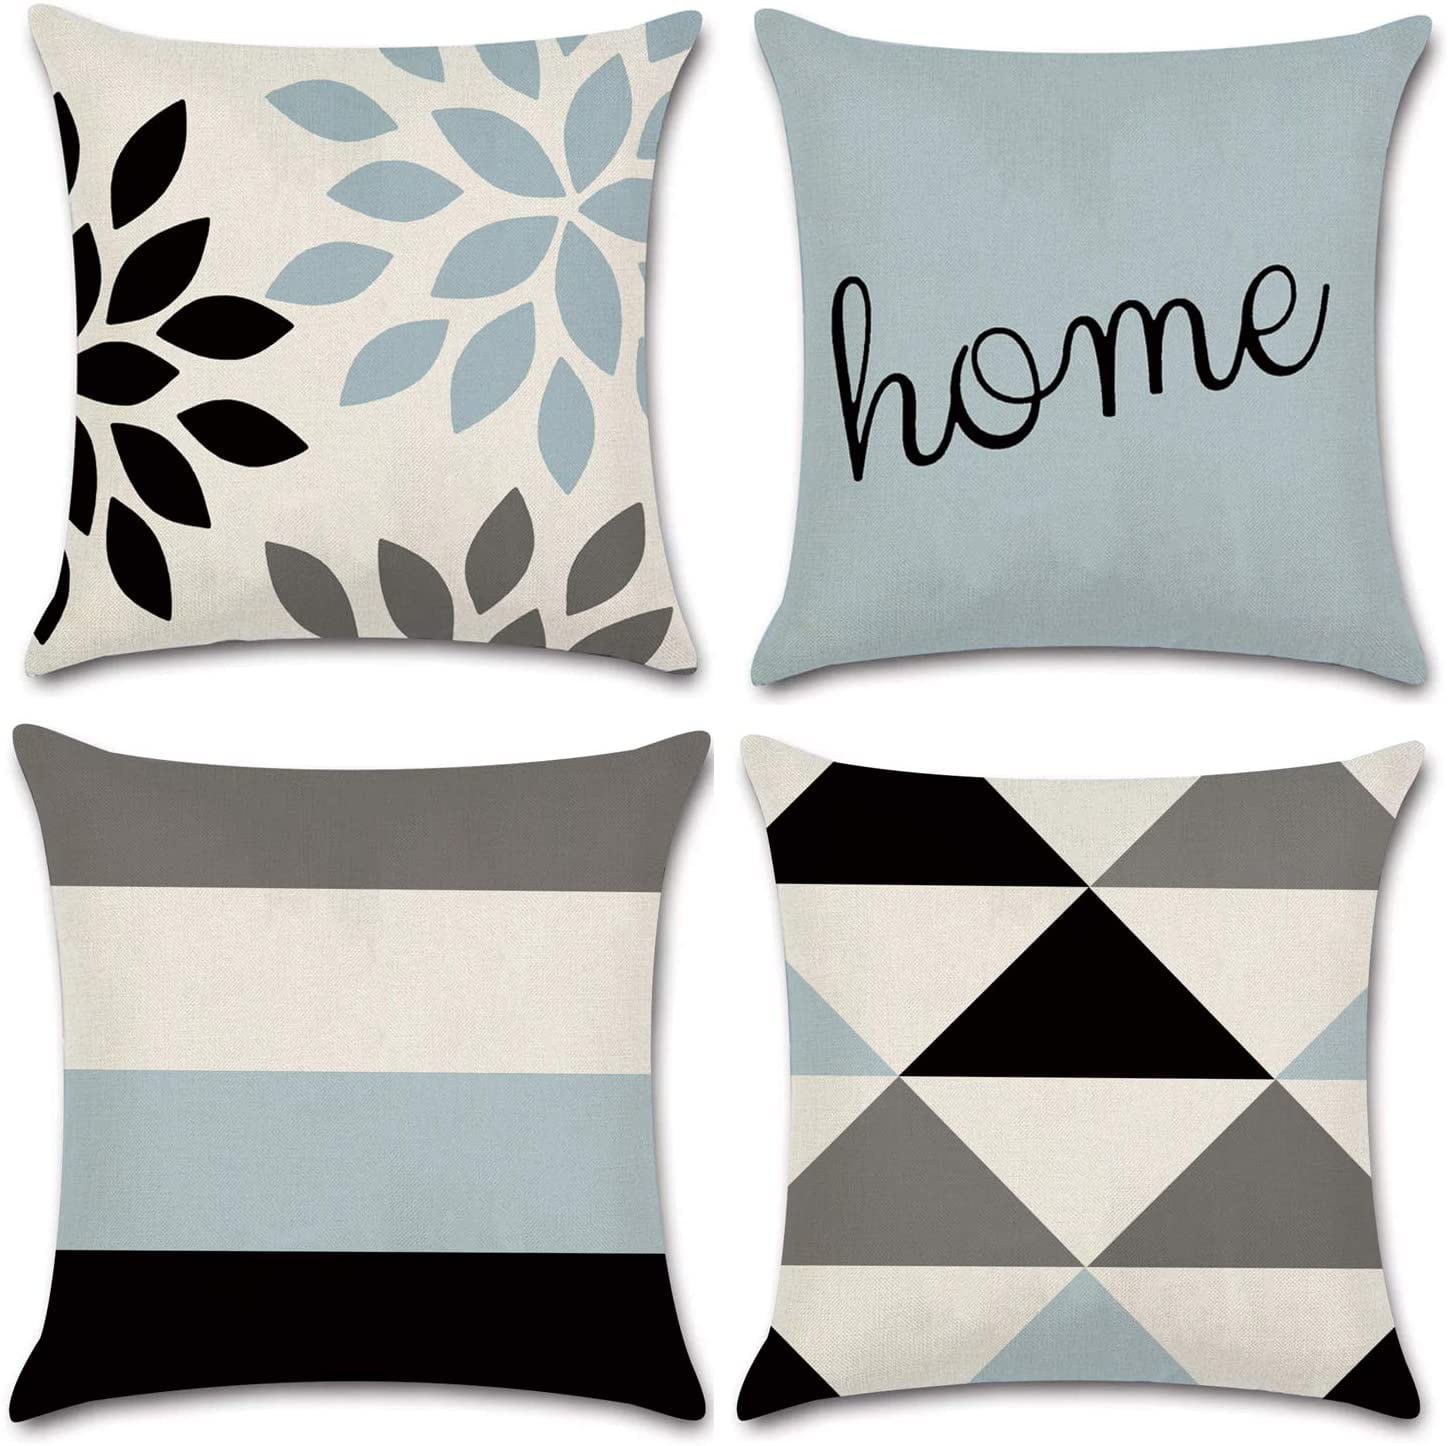 16" Geometric Cotton Linen Throw Pillow Case Cushion Cover Decoration Set of 2 